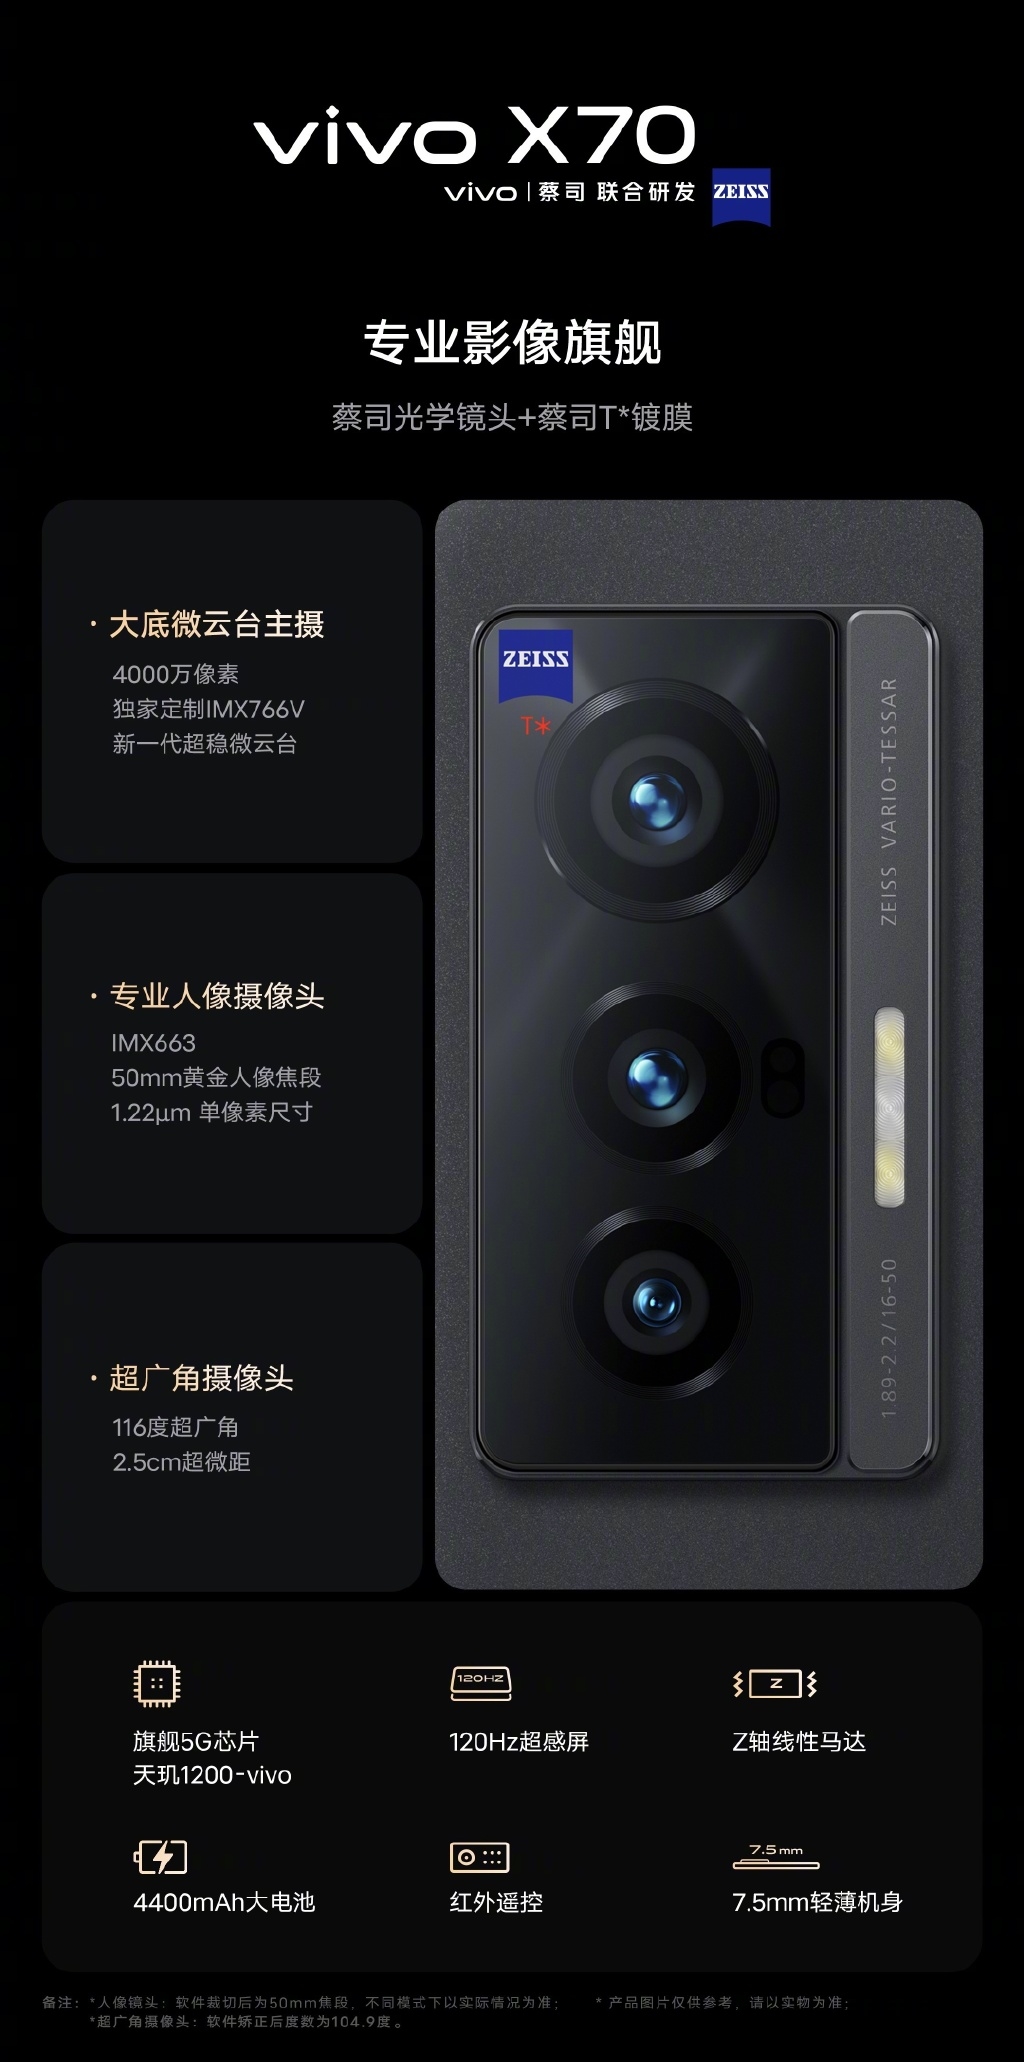 Особенности камер смартфонов серии Vivo X70